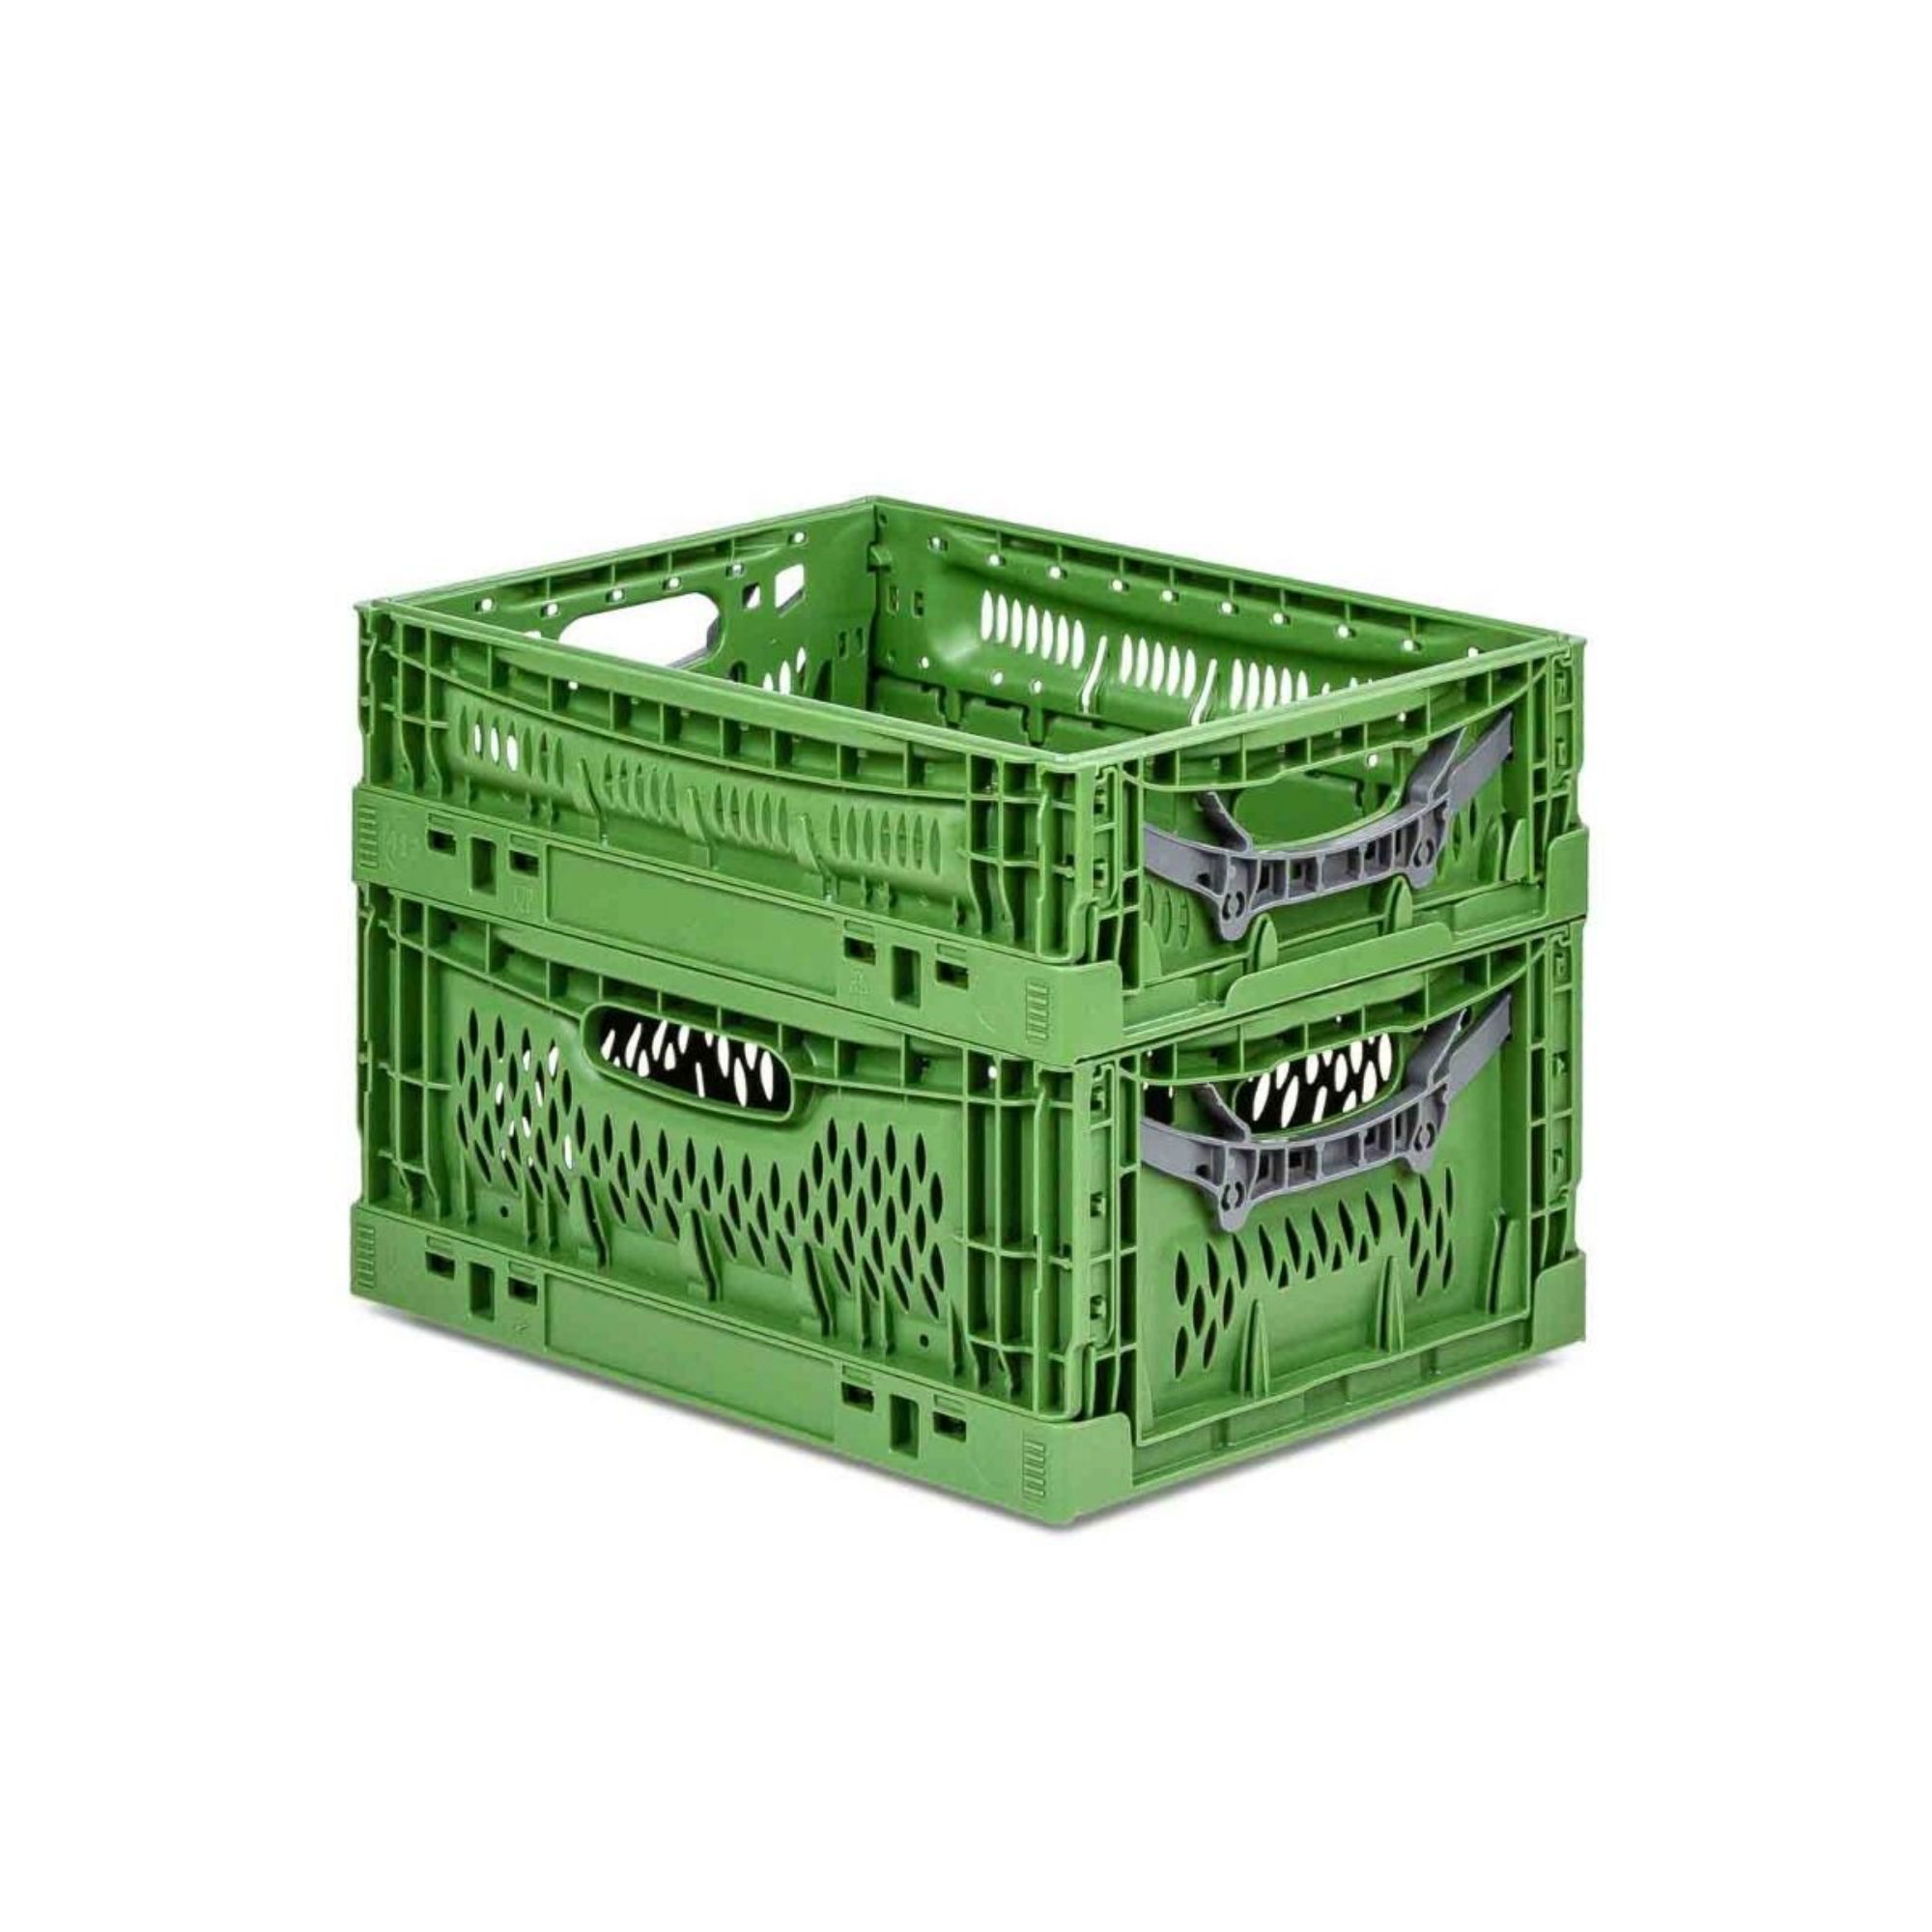 Stabile Profi-Klappbox Chameleon in Industriequalität | HxBxT 23x40x60cm | 45 Liter | klappbar stapelbar durchbrochen lebensmittelecht | Eurobox Eurobehälter Transportbehälter Stapelbehlter Faltbox